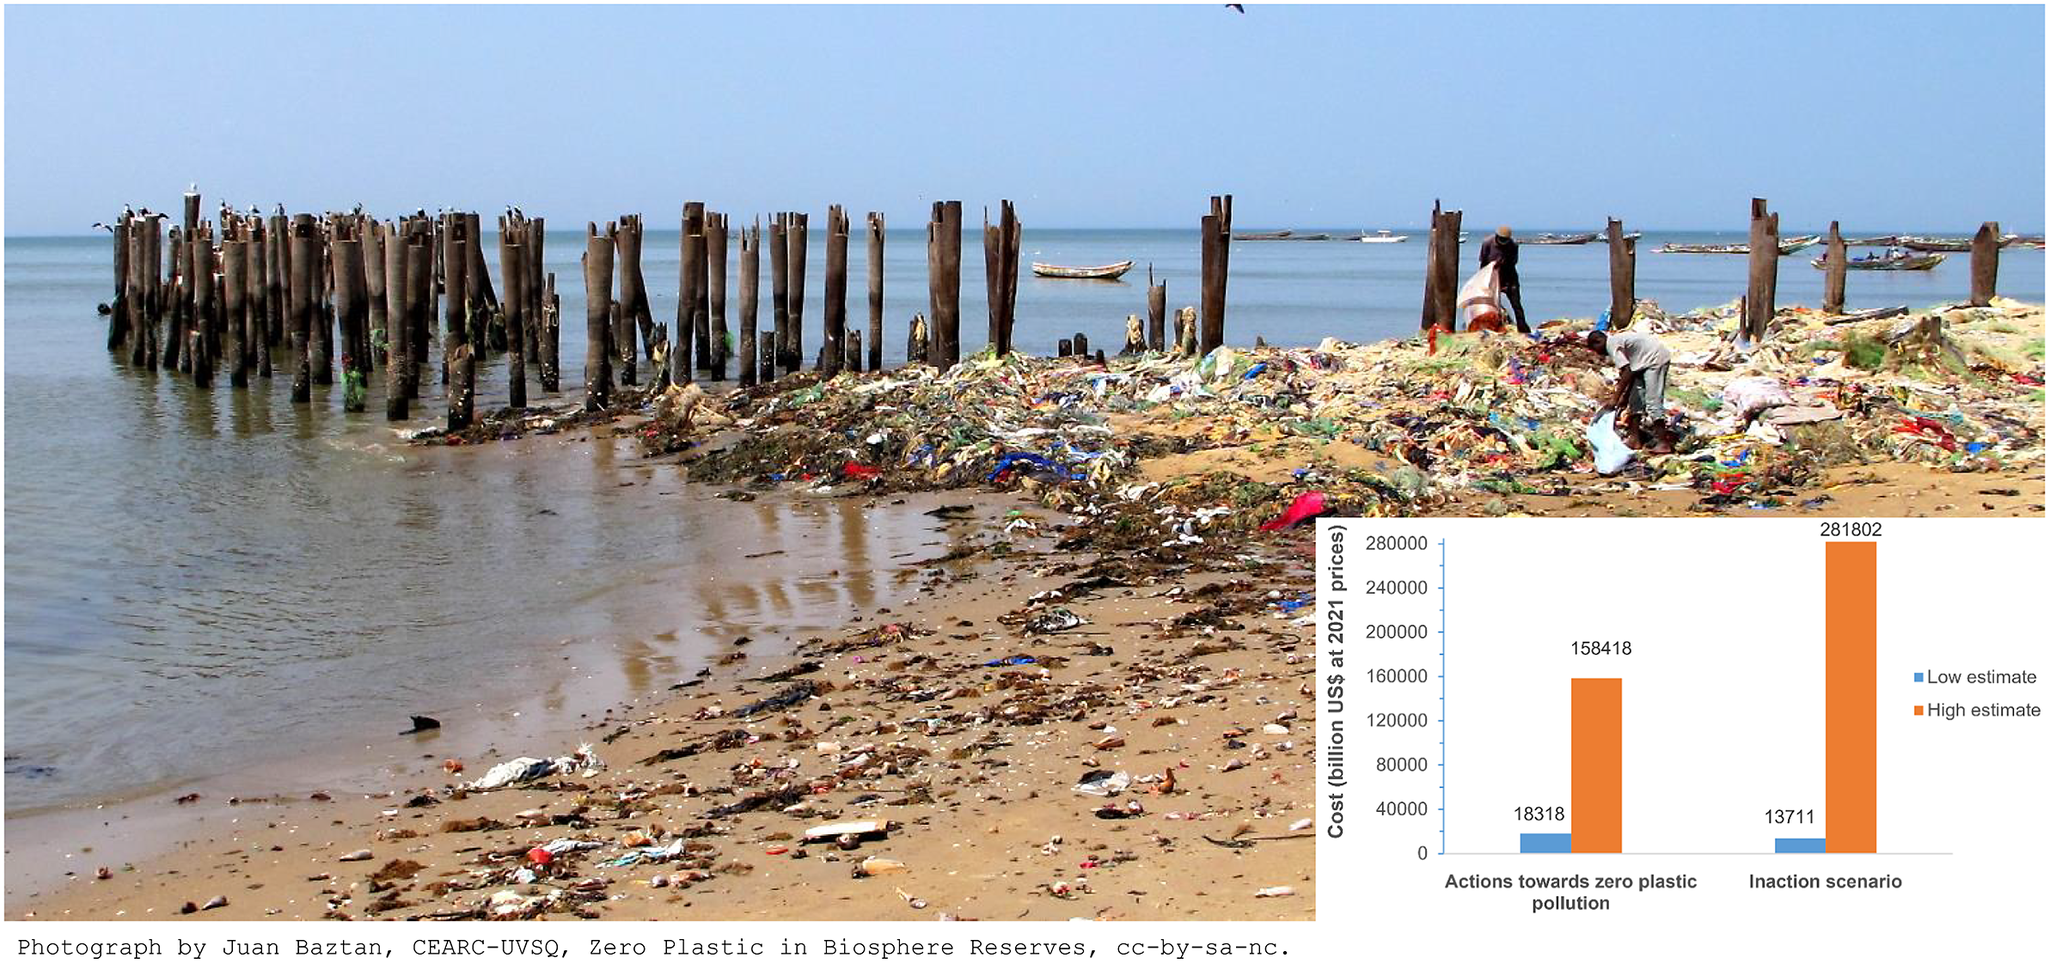 Reducing plastic production: Economic loss or environmental gain